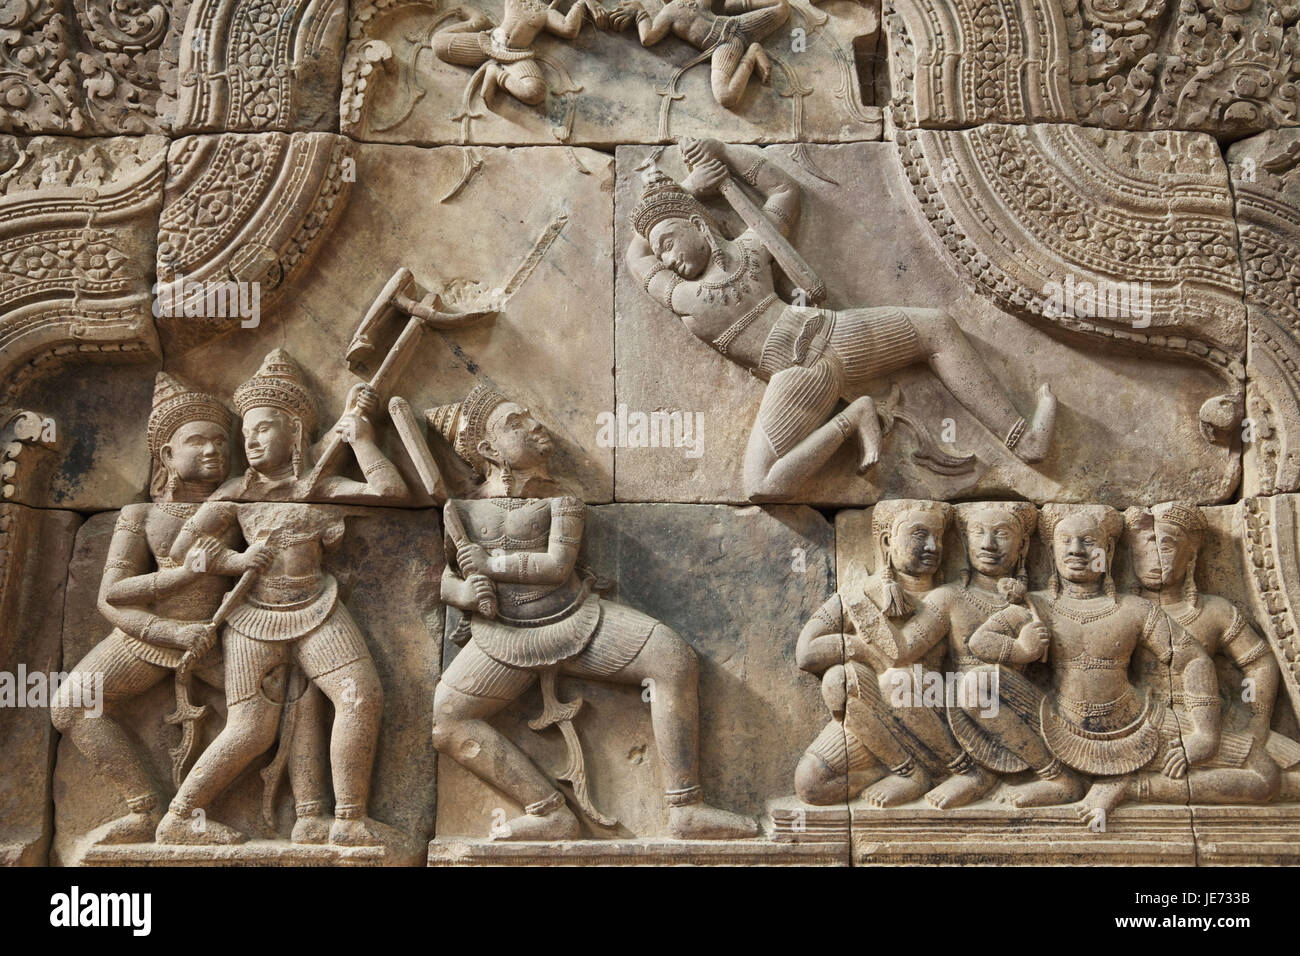 Kambodscha, Phnom Penh, Nationalmuseum, das Sandsteinrelief, Repräsentation "Fight of Bhima und Duryodhana", Angkor-Periode, Banteay Srei Stil, 10. Jahrhundert Stockfoto